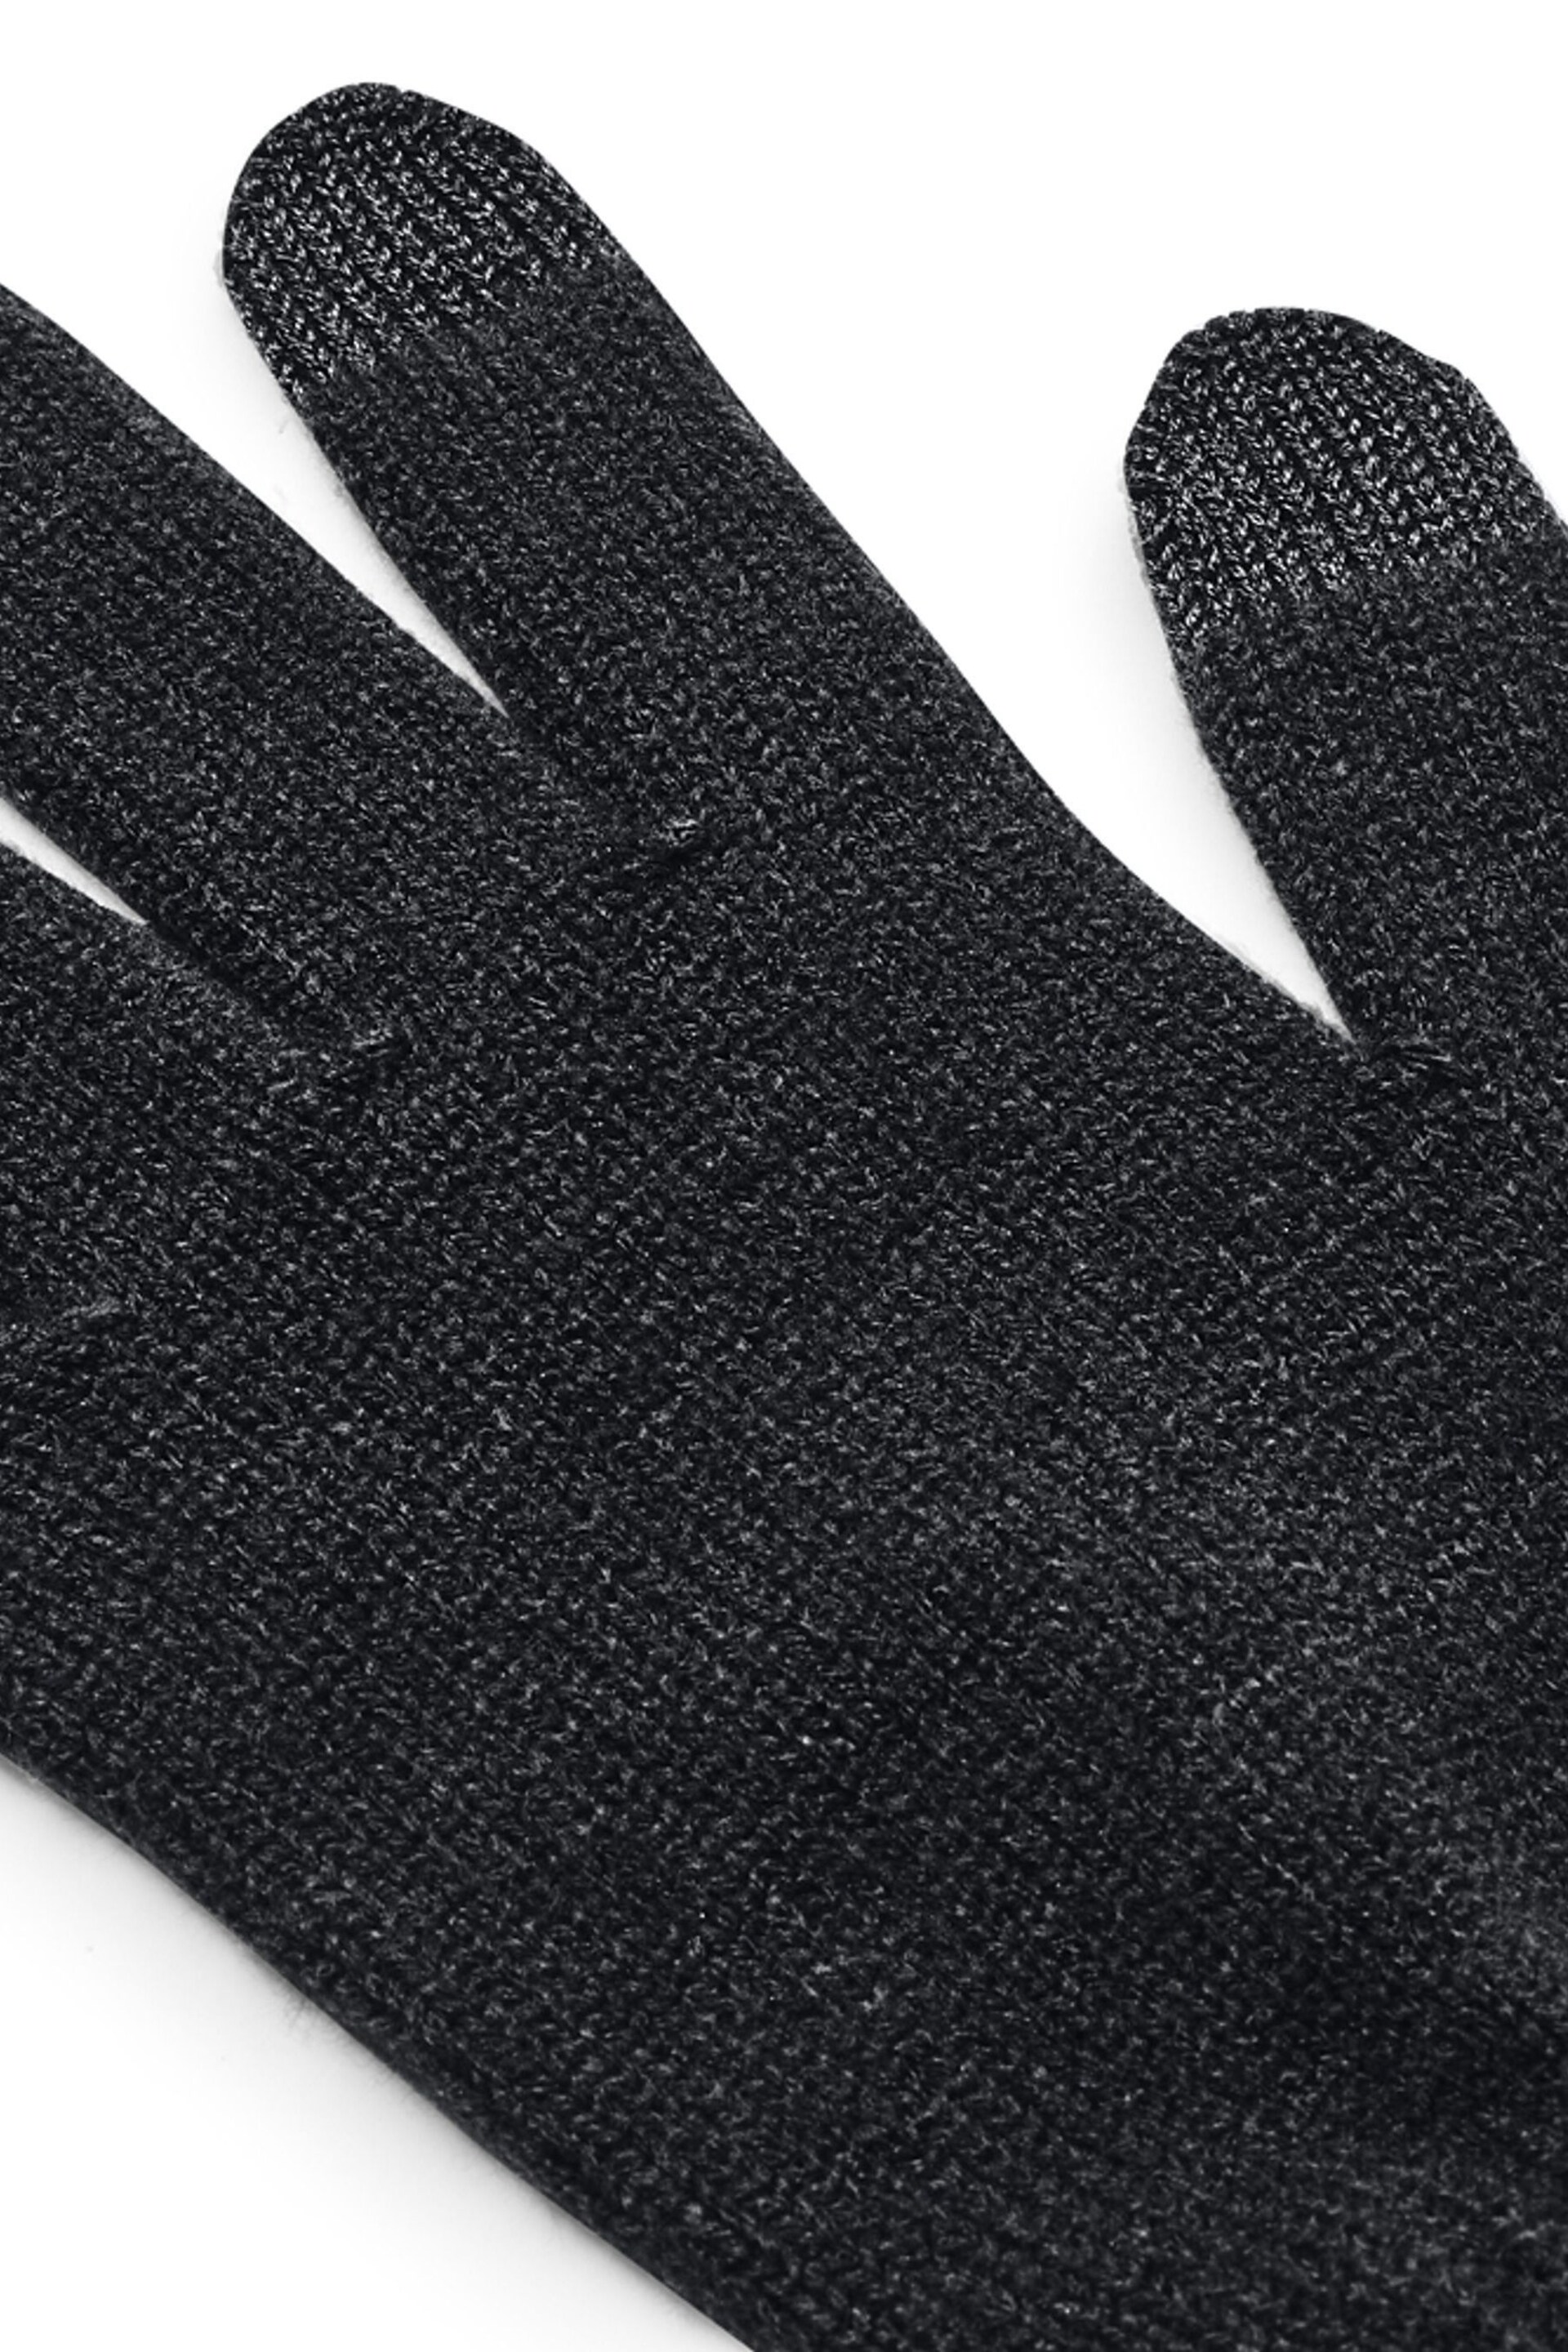 Under Armour Black Halftime Gloves - Image 3 of 3